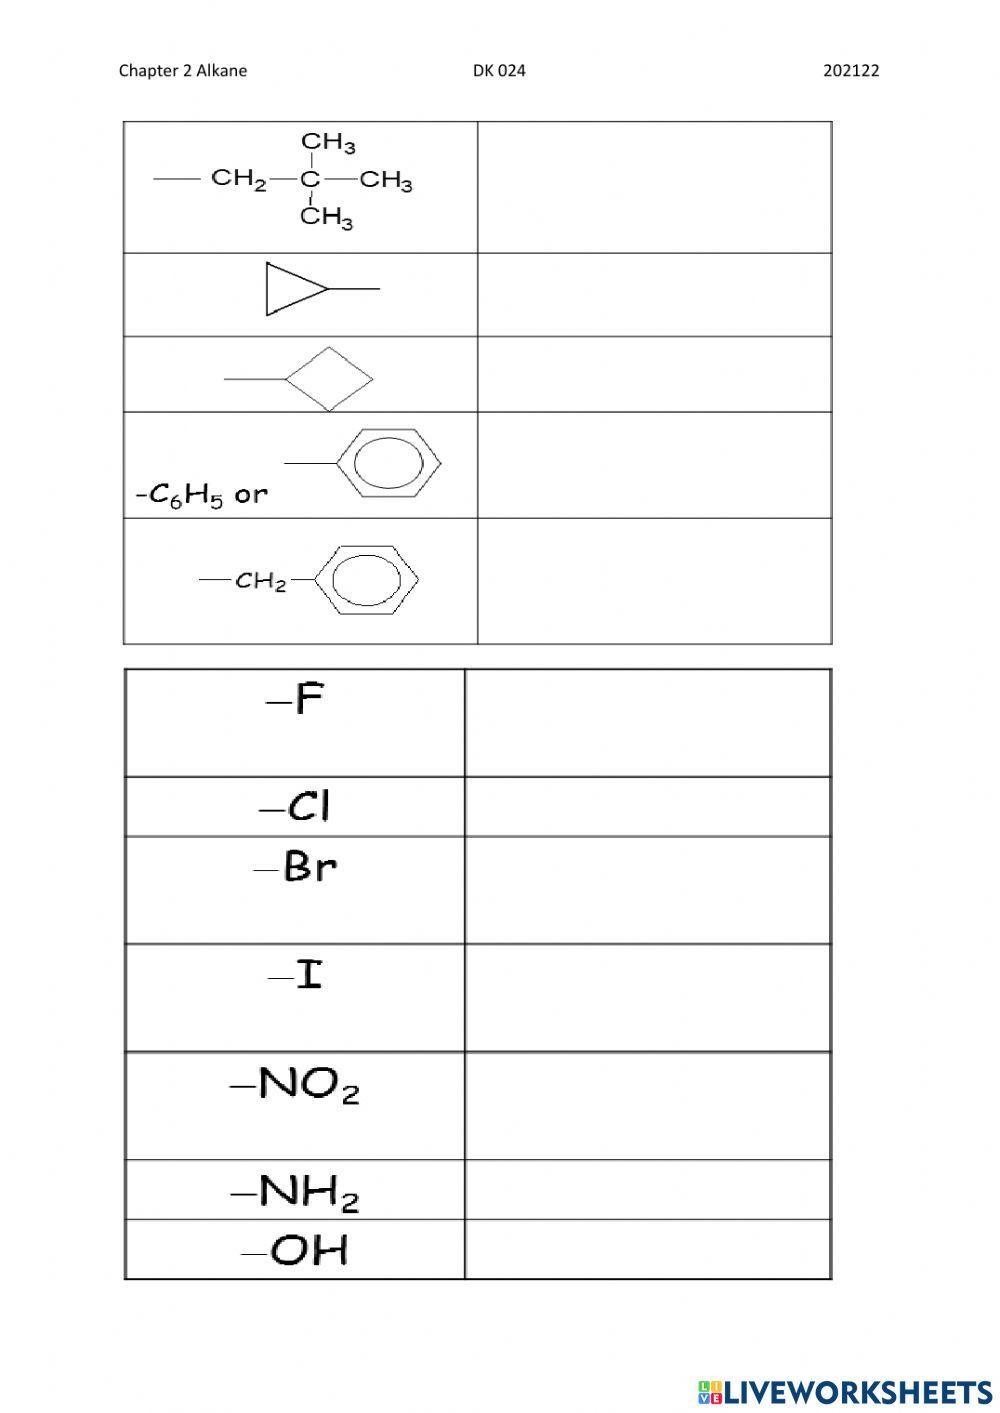 Substituent in alkane